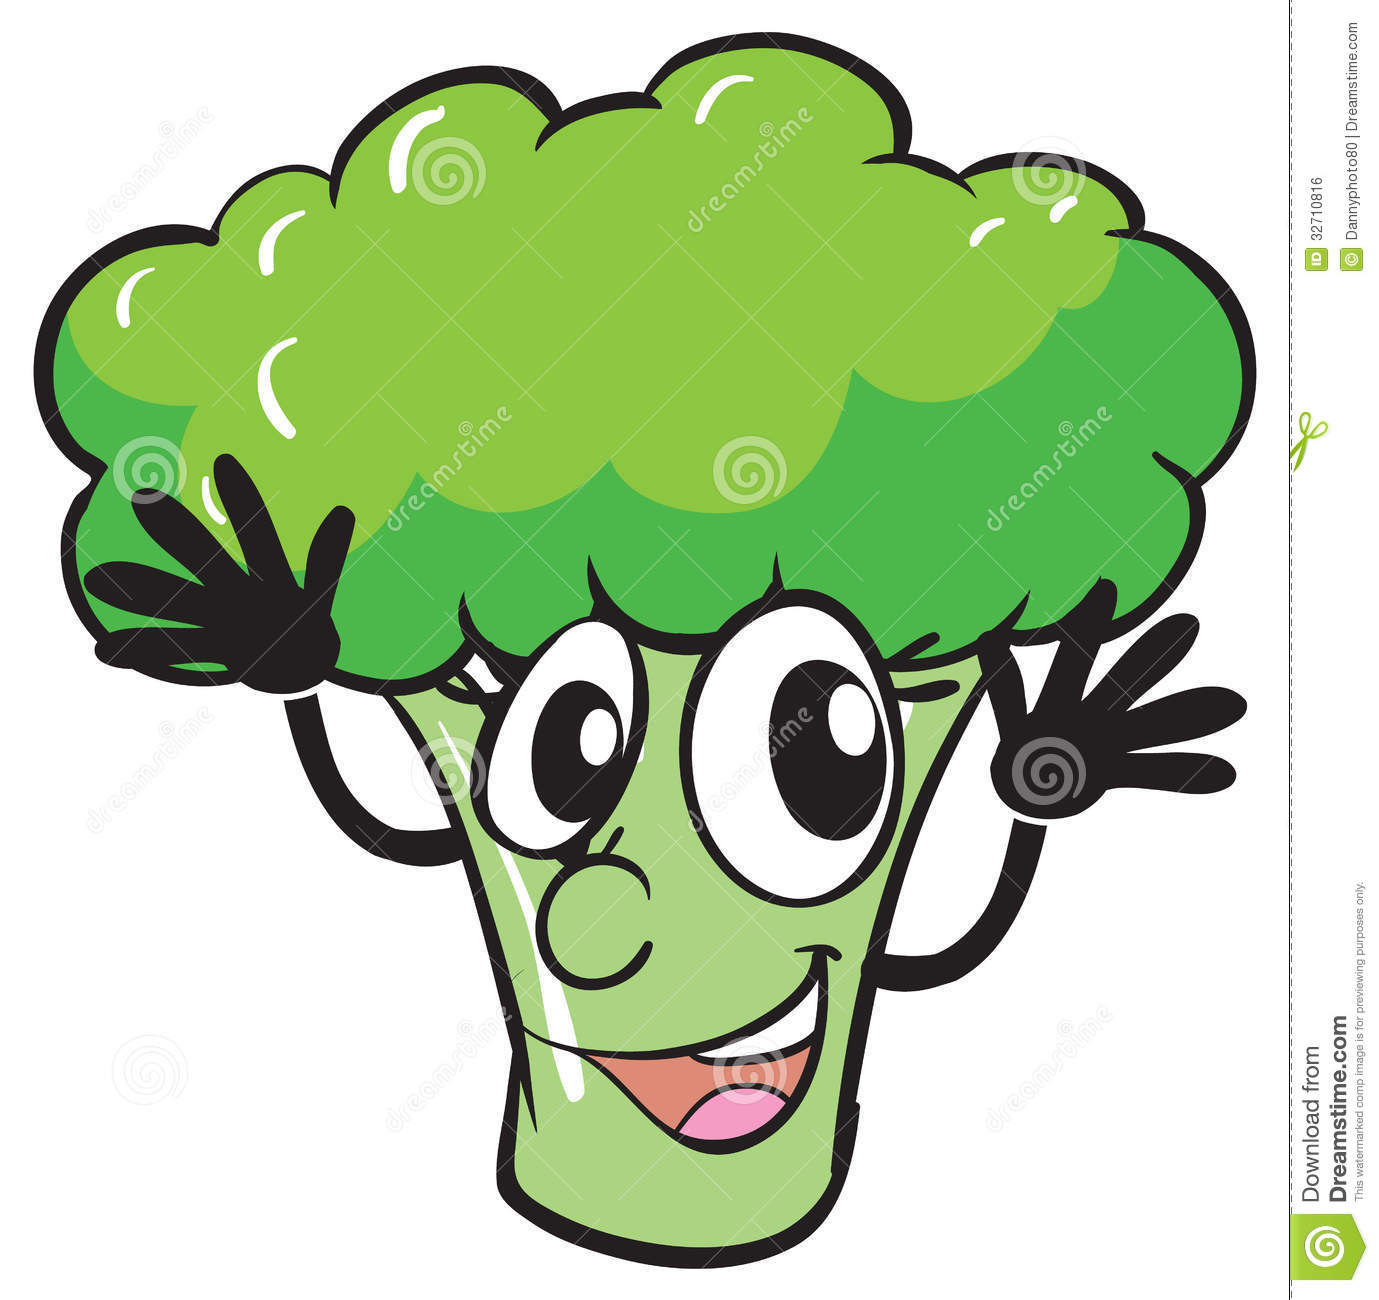 Broccoli Royalty Free Stock Image   Image  32710816